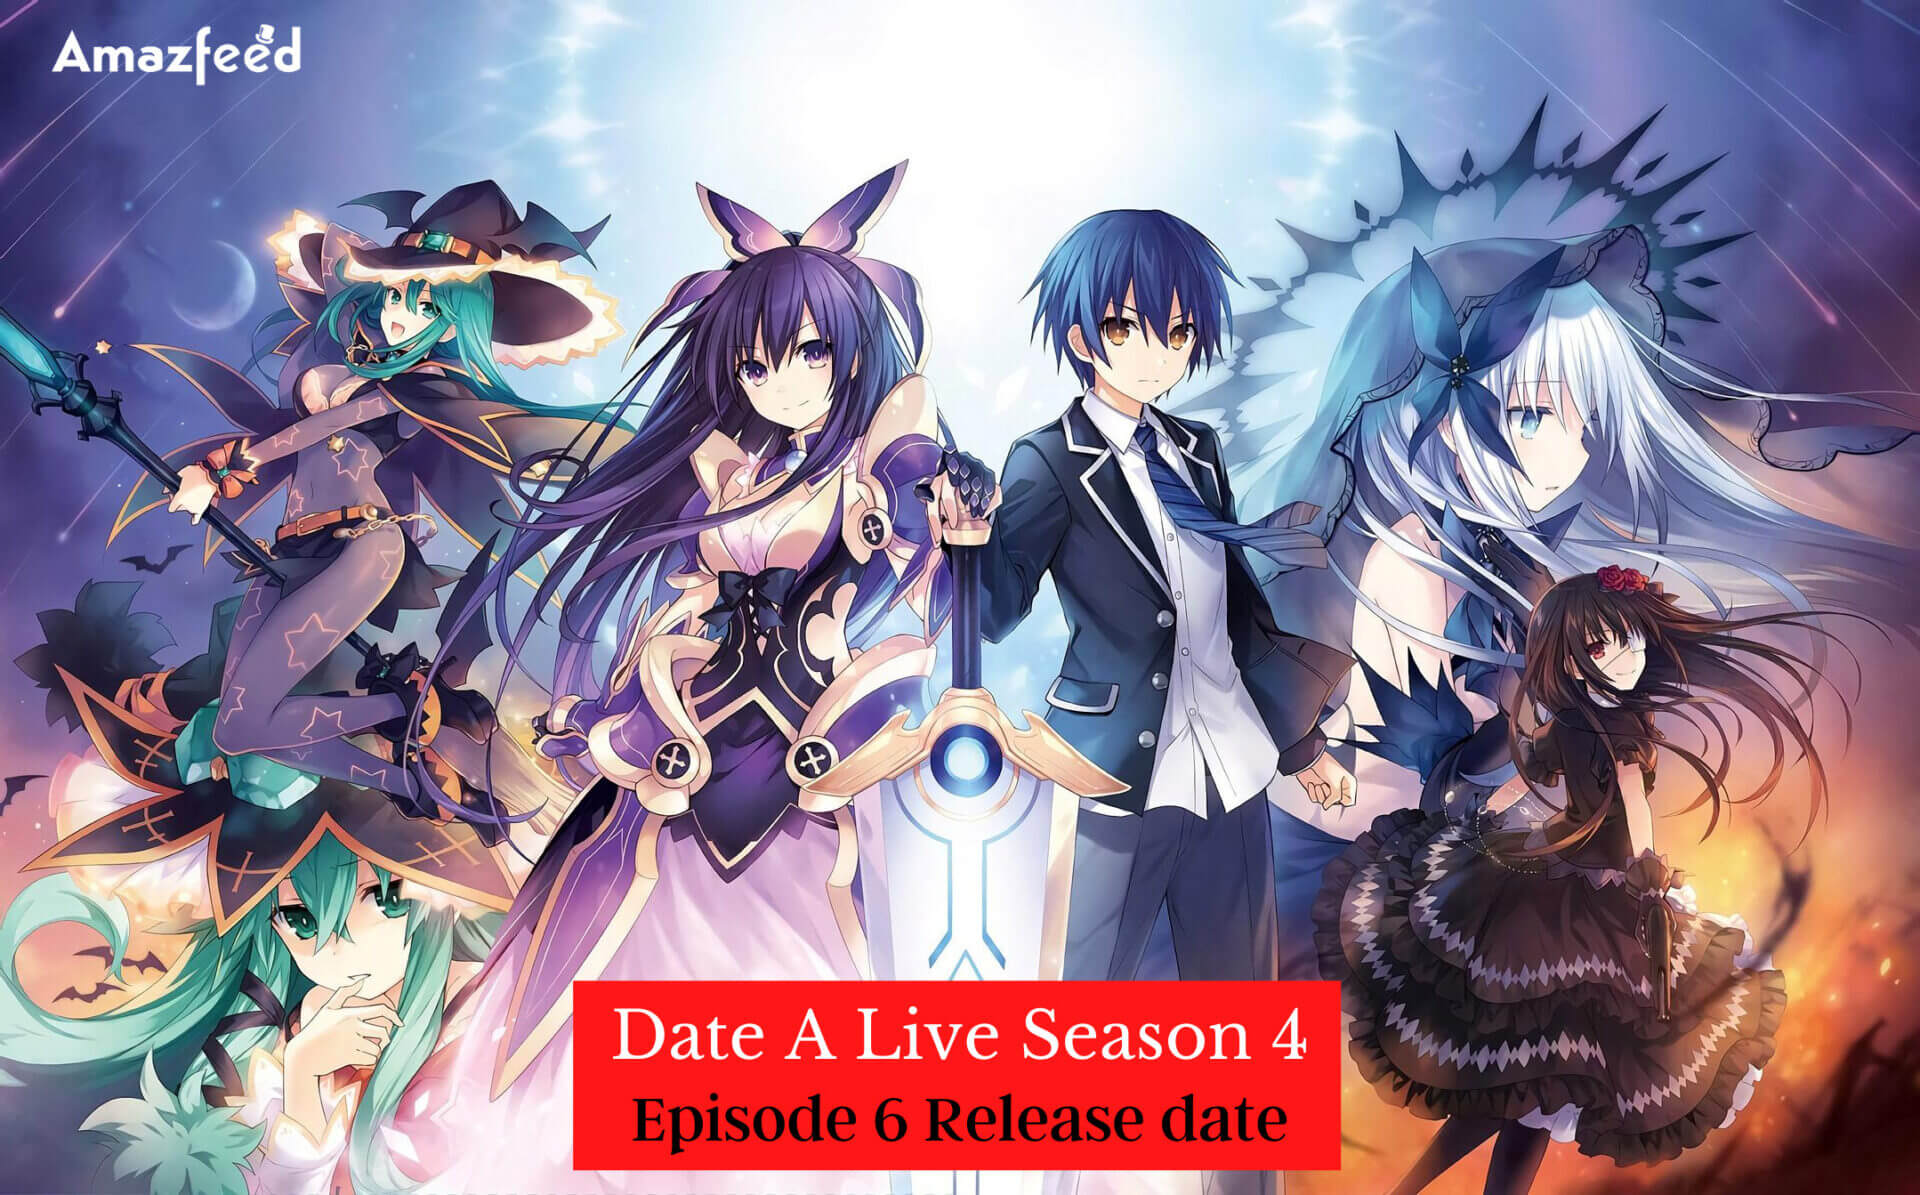 Date A Live Season 4 episode 6 release date